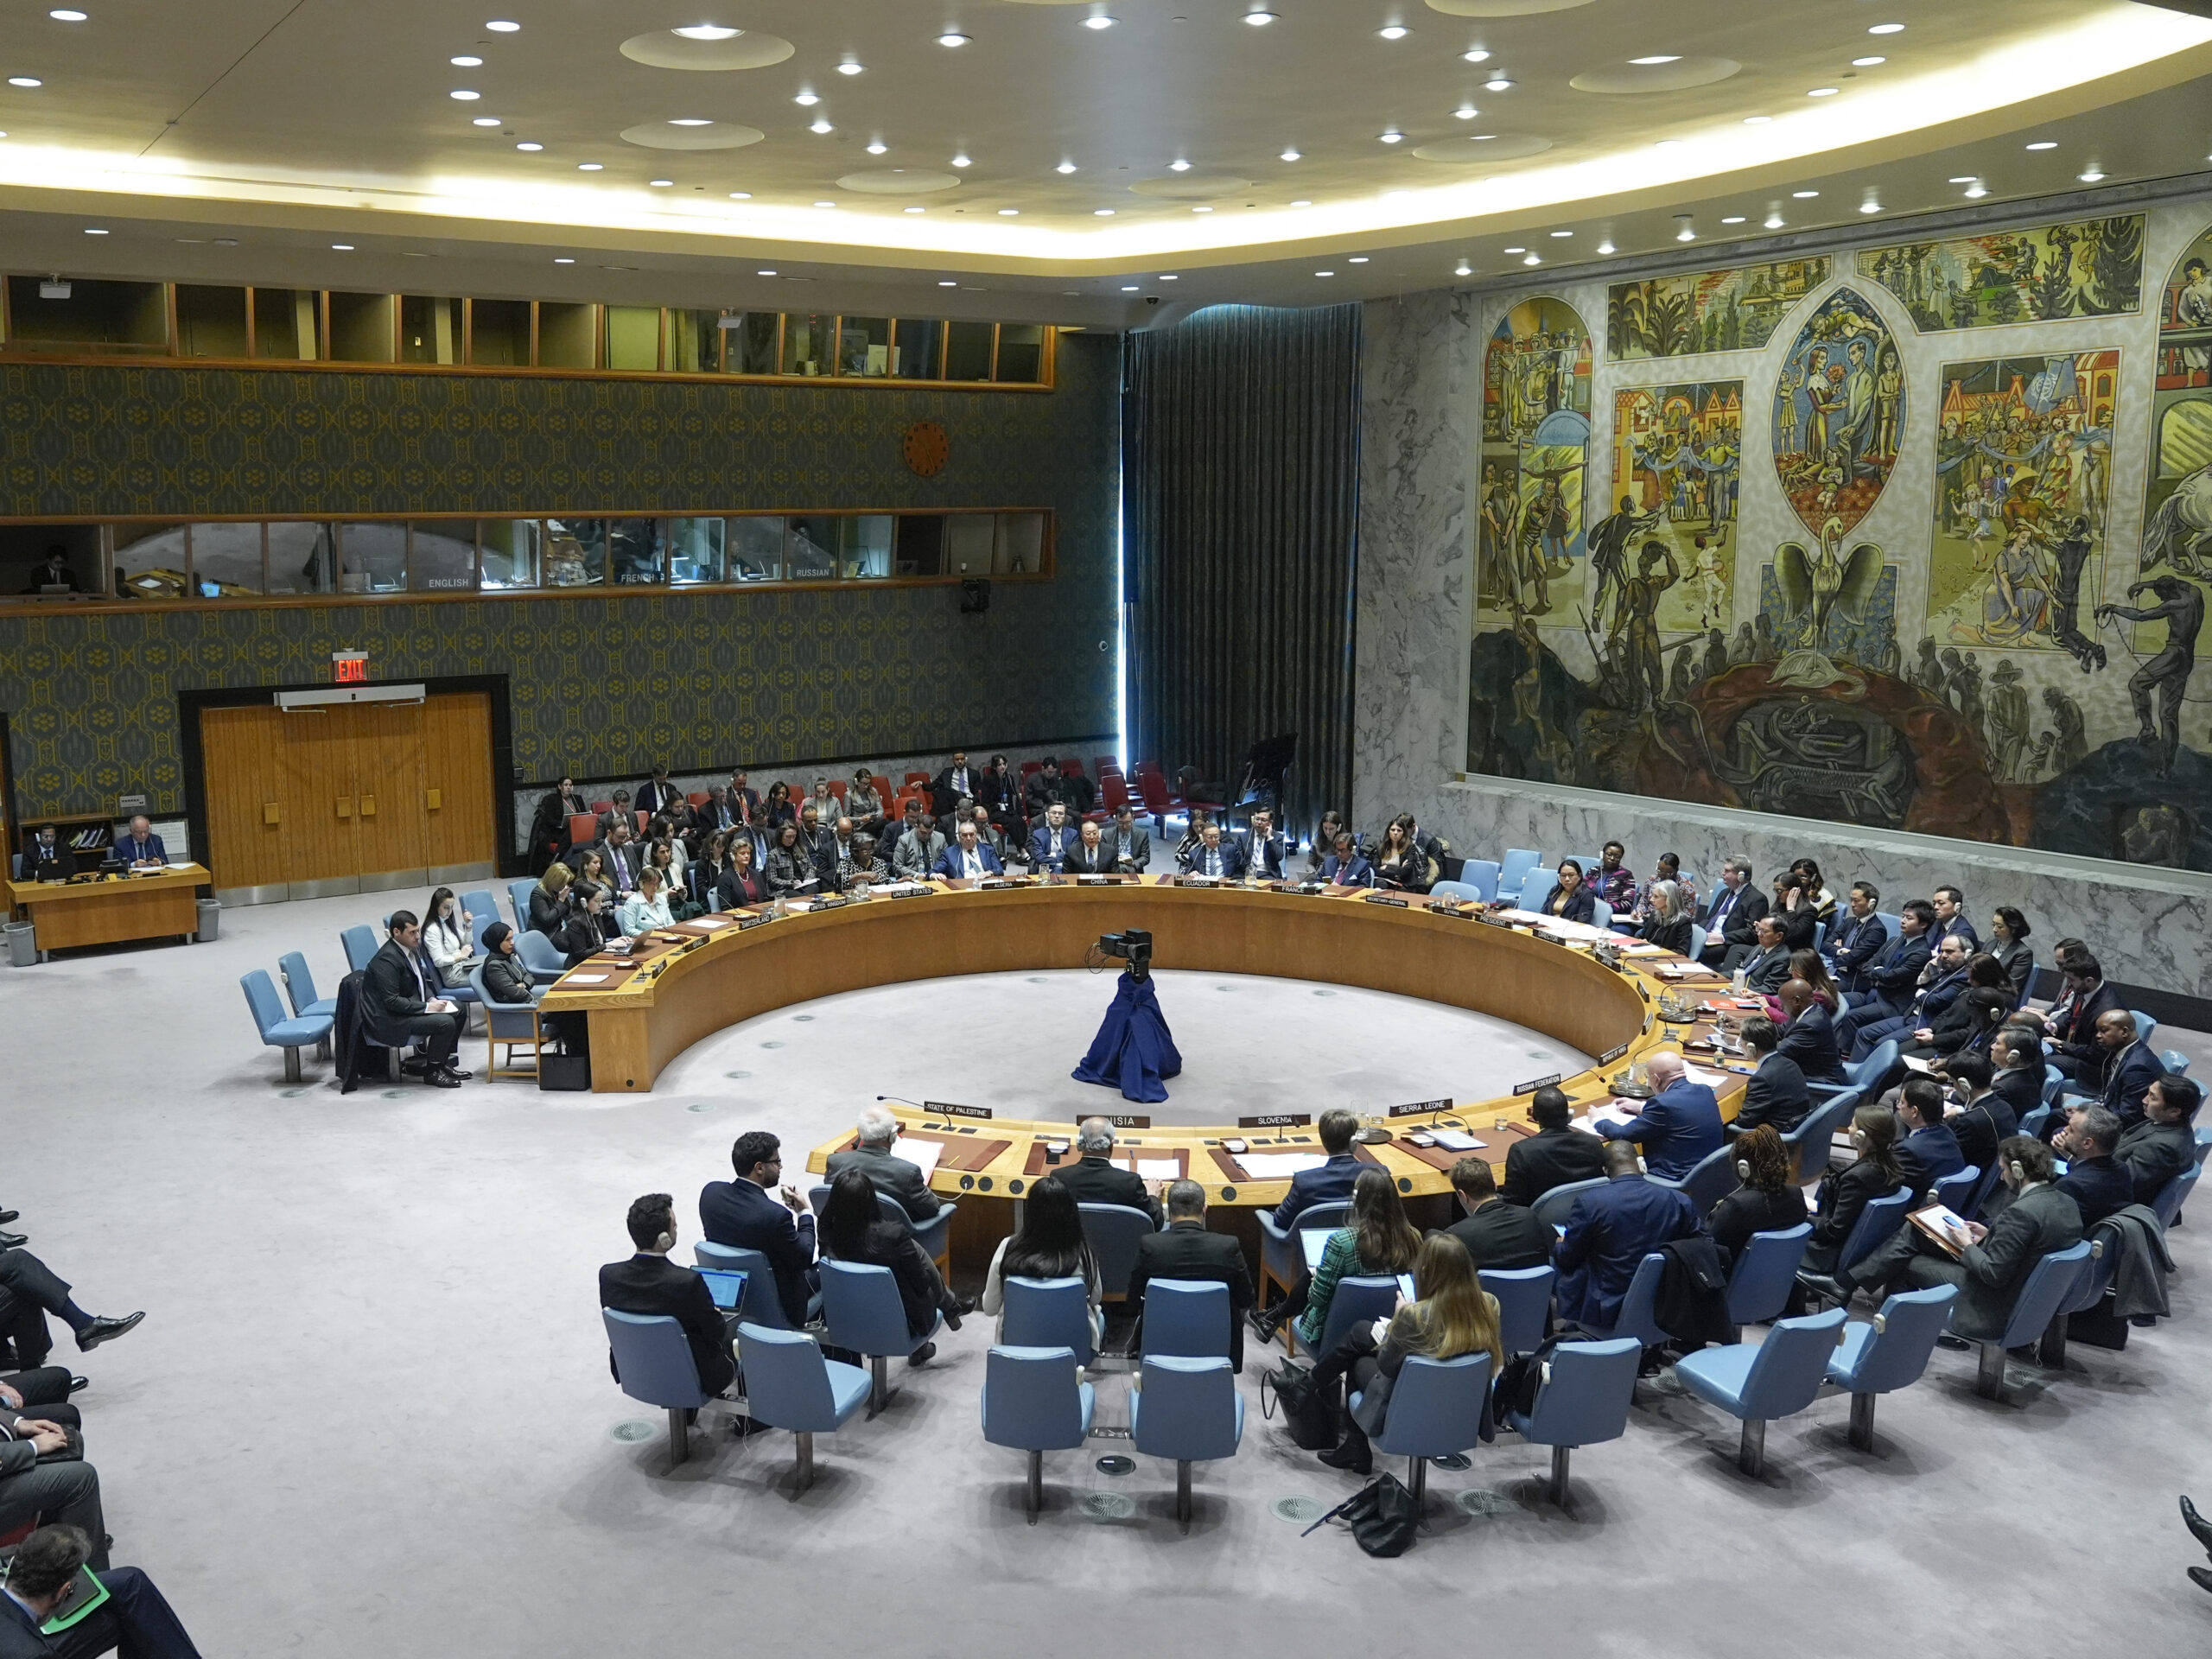 The U.S. has again vetoed a U.N. resolution demanding an immediate cease-fire in Gaza